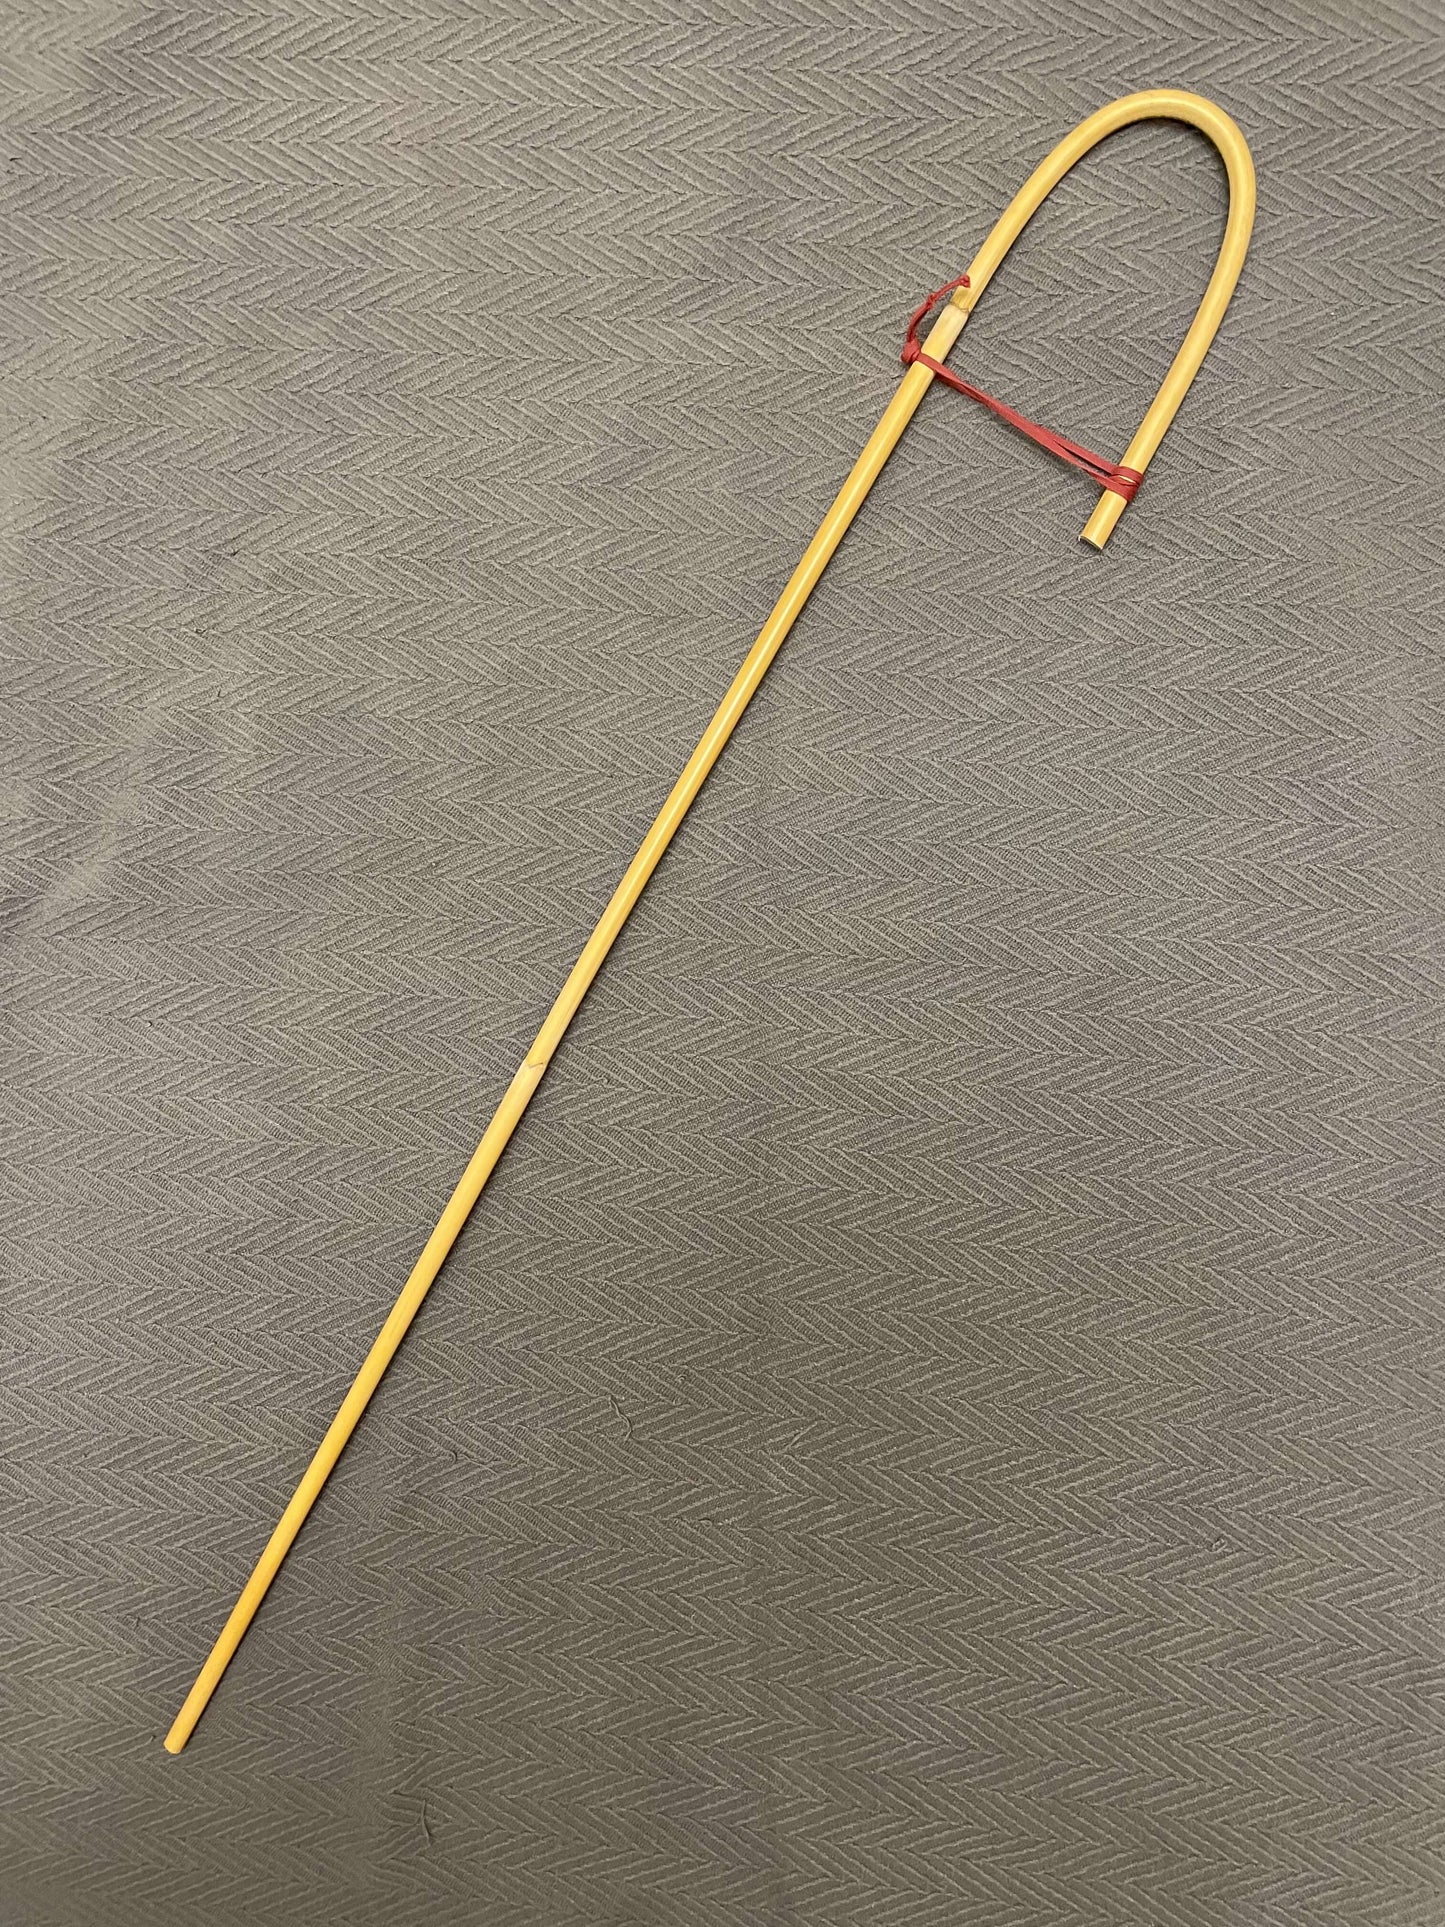 English Traditional Crook Handle School Canes - Classic Dragon Rattan School Cane / Punishment Cane - 90-95 cms L & 7.5-8.5/9-10/10-11mm/11-12mm D